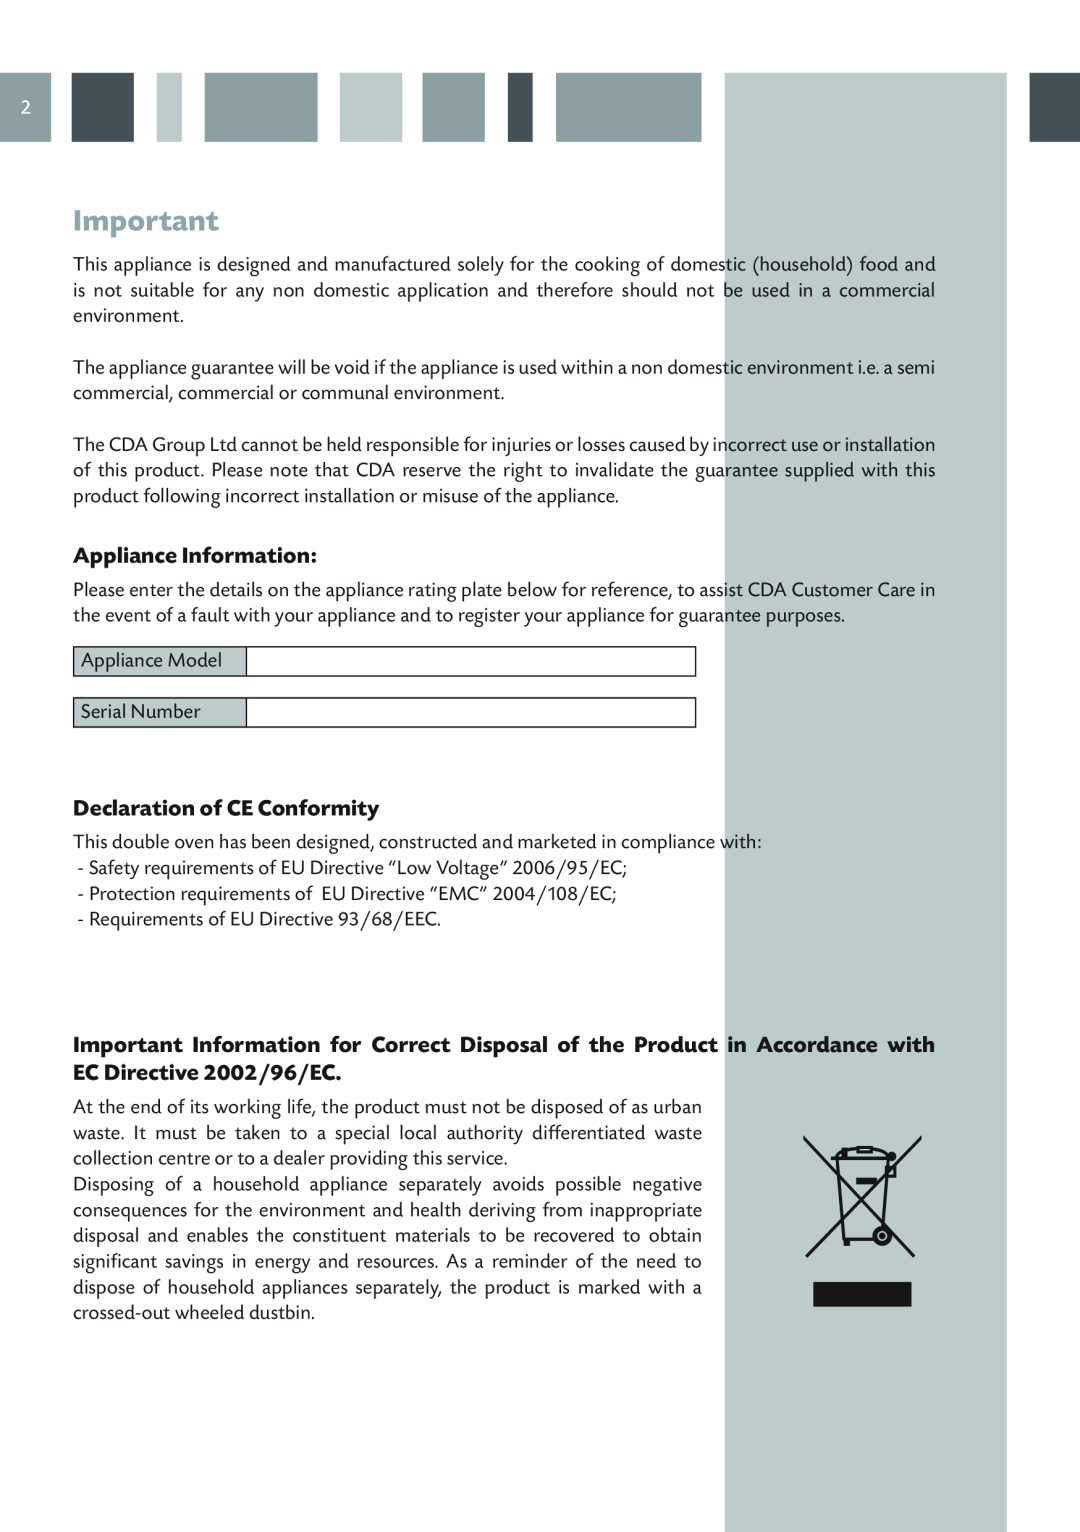 CDA DV 710 manual Appliance Information, Declaration of CE Conformity 